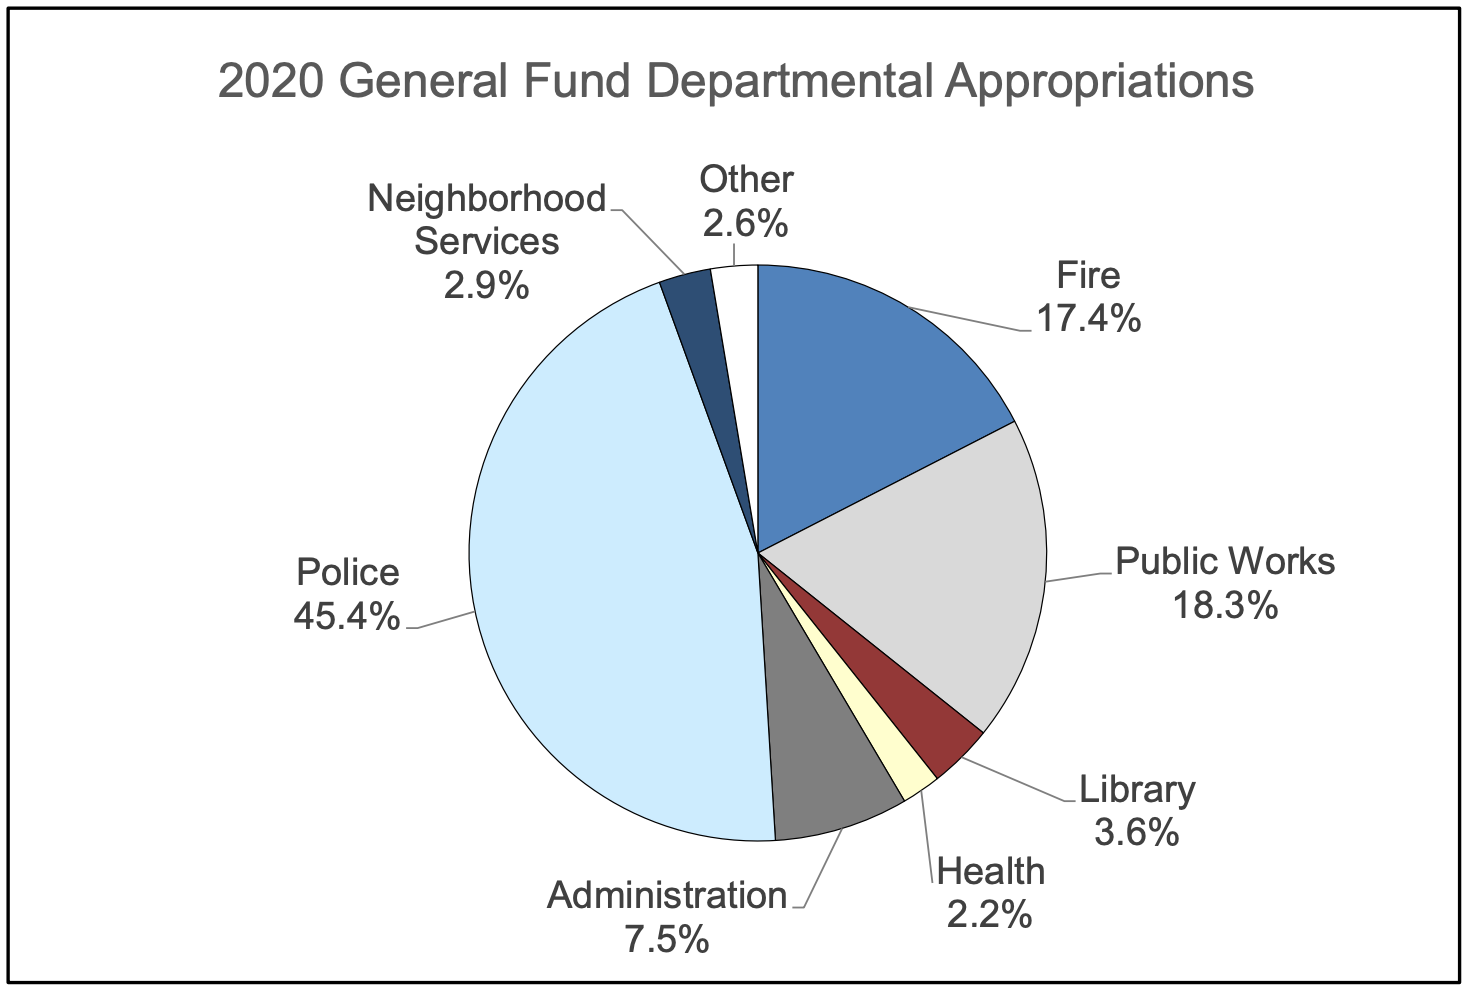 2020 Milwaukee General Fund Departmental Appropriations pie chart